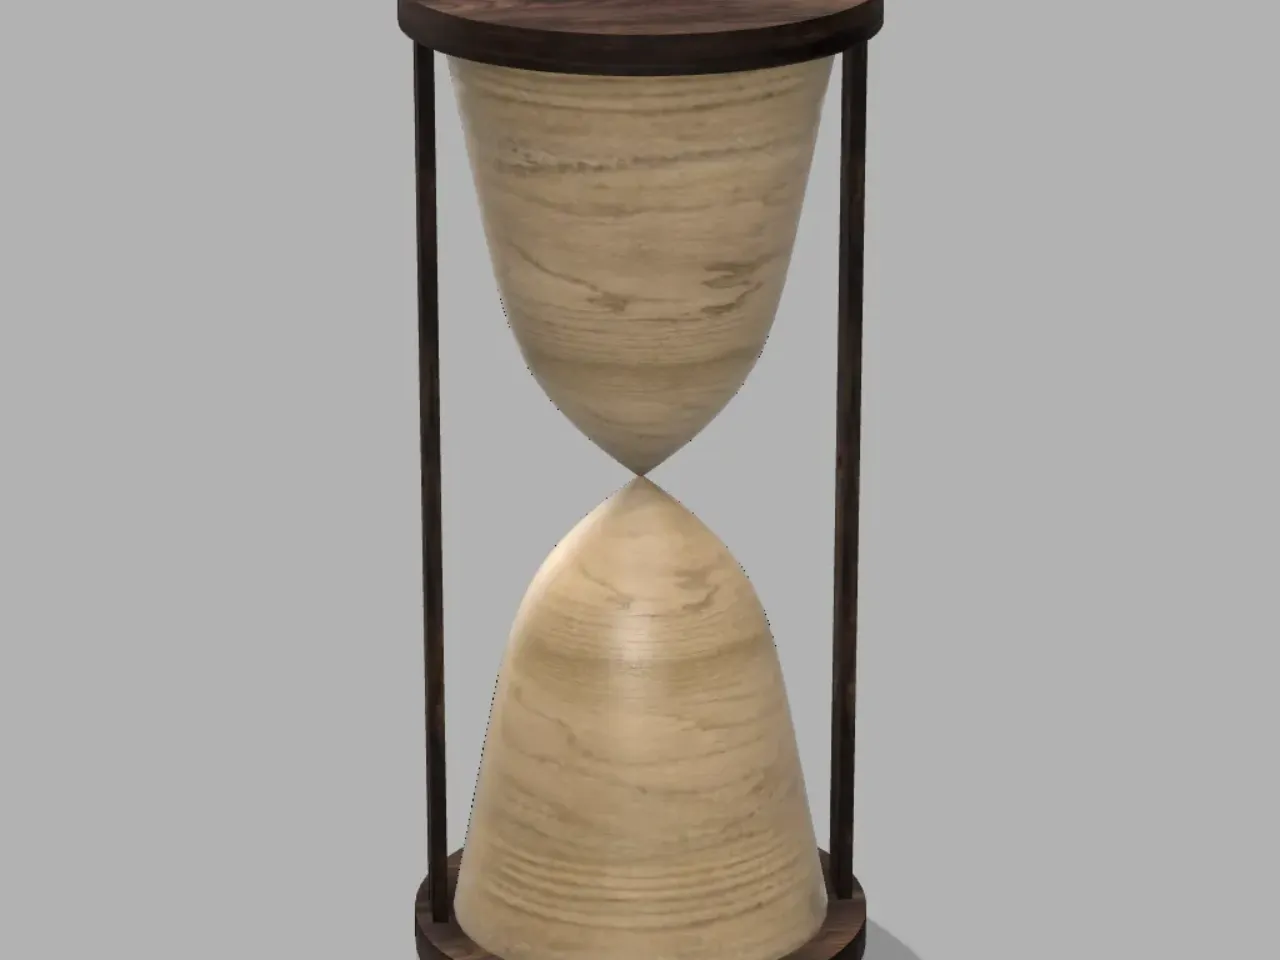 who made the hourglass